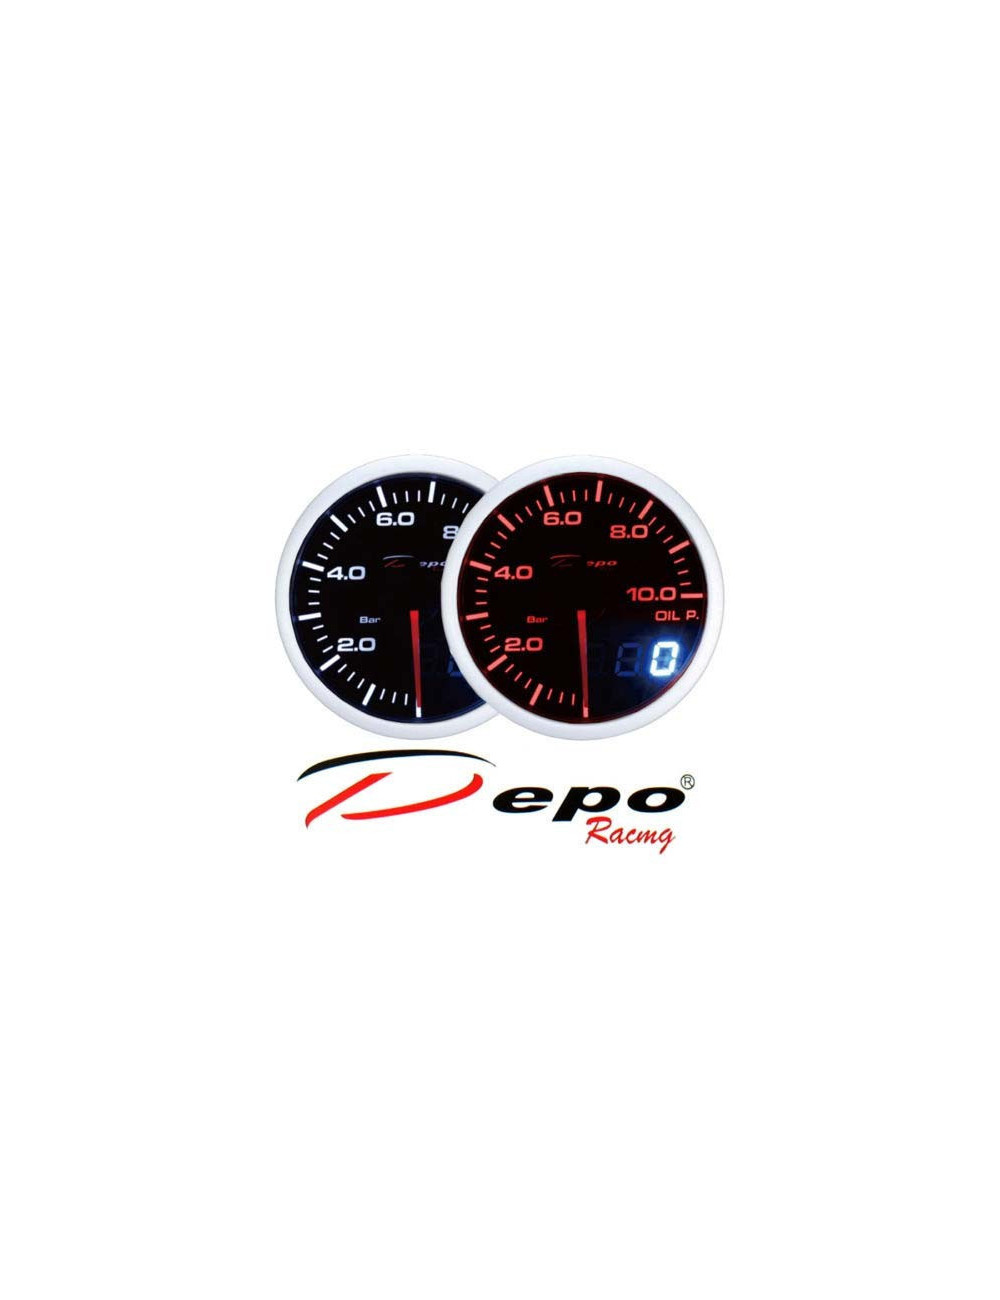 DEPO RACING Manometro Dual View Pressione Olio 0-10 bar DEPO Racing